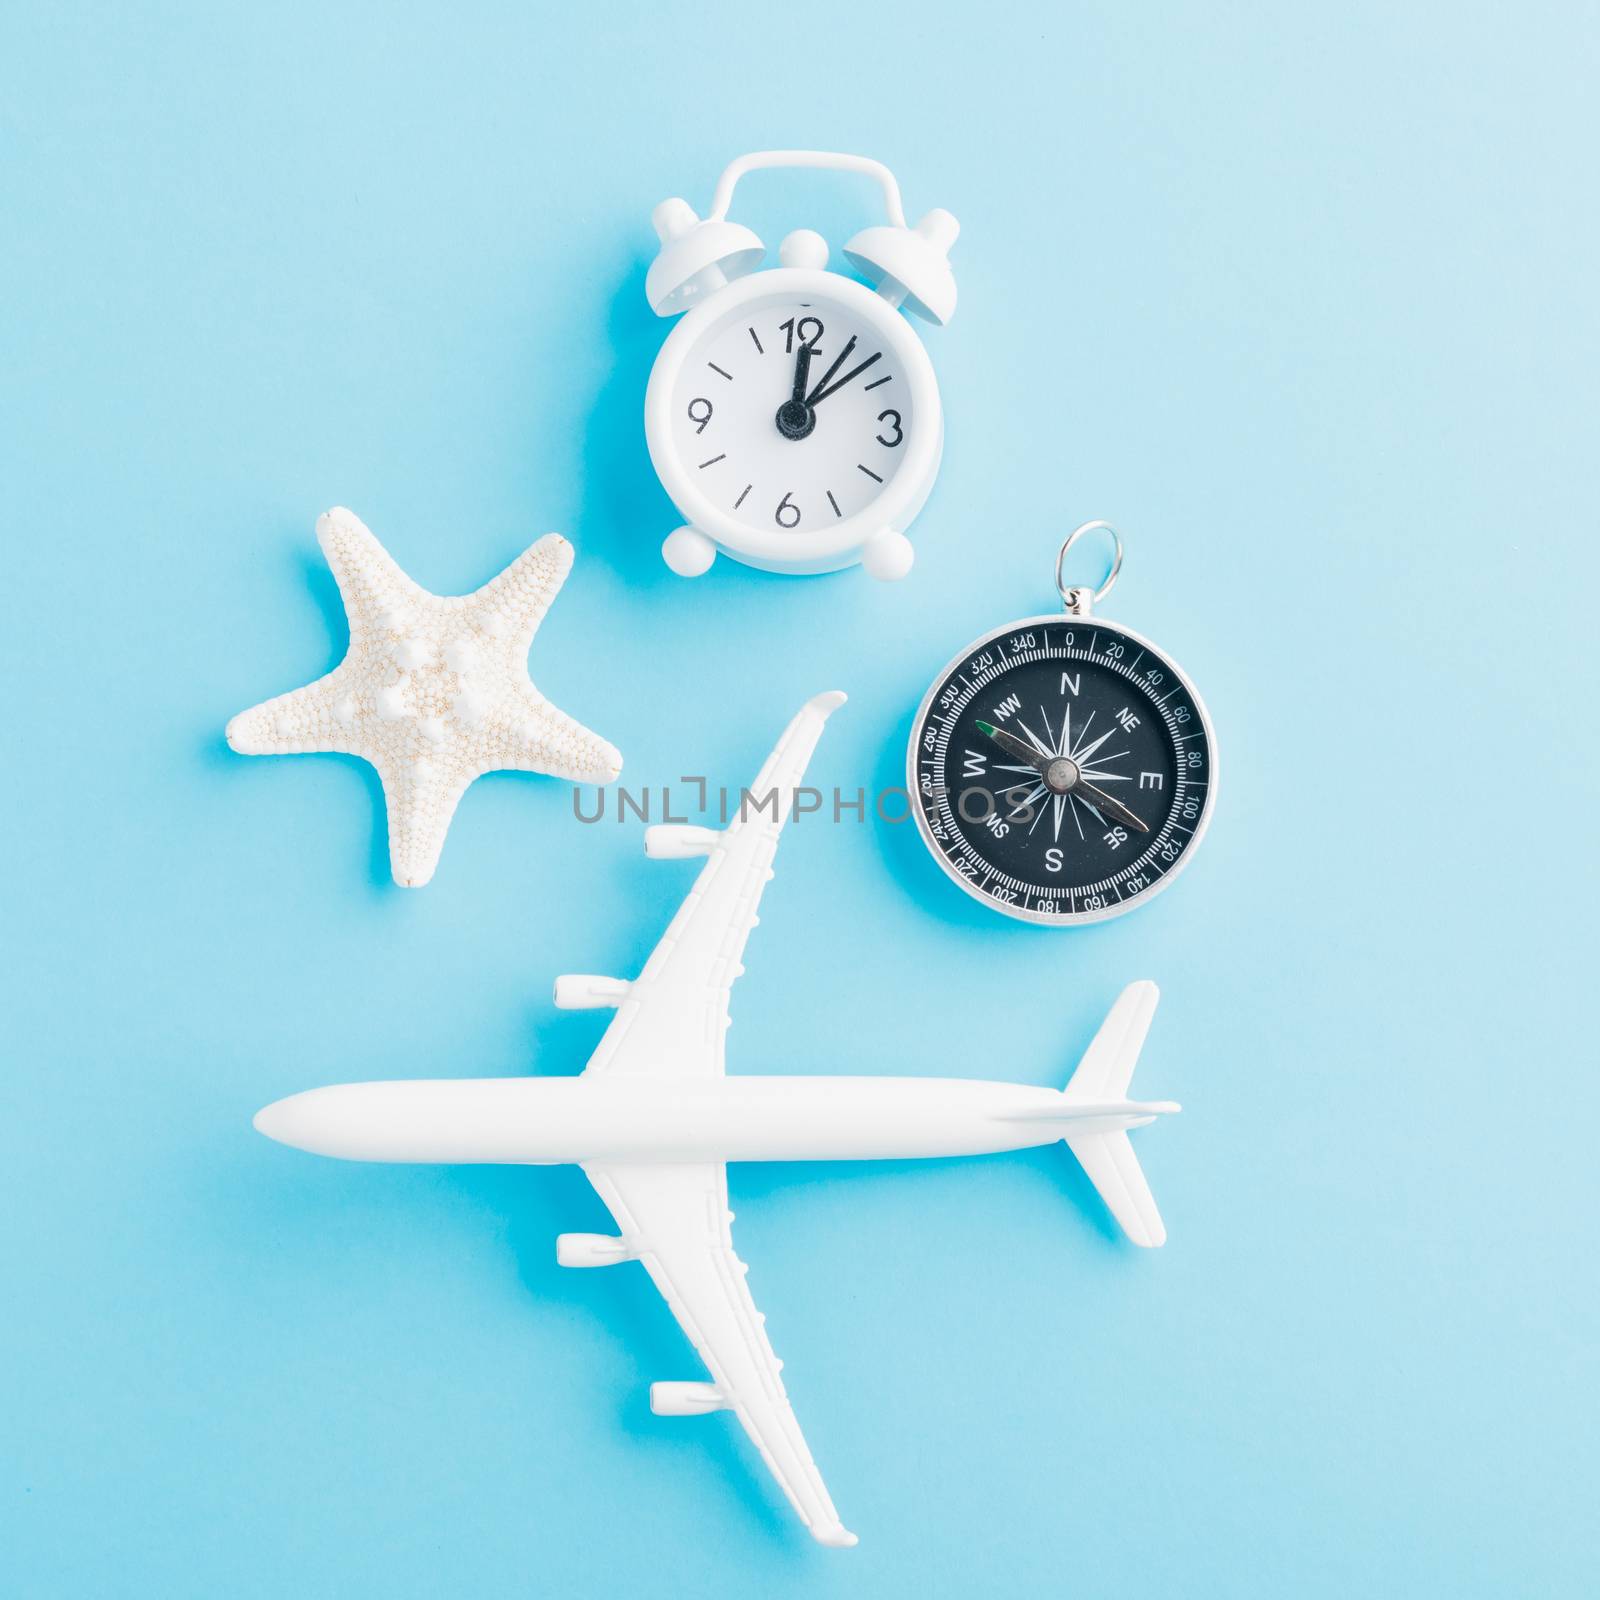 minimal toy model plane, airplane, starfish, alarm clock and com by Sorapop